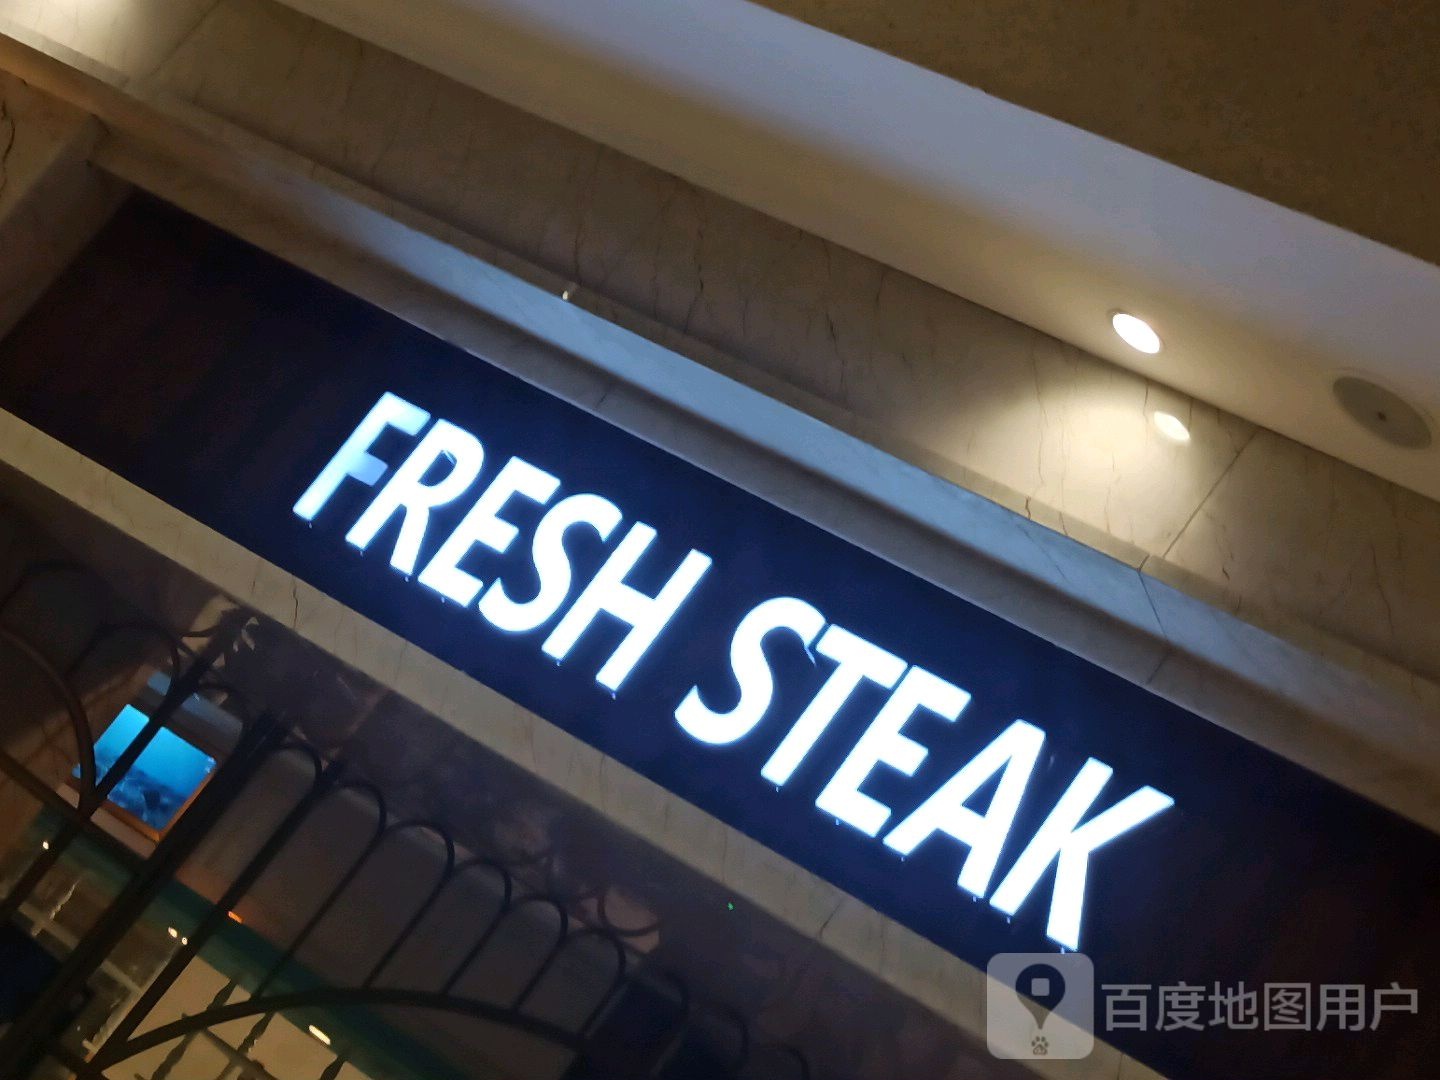 FRESH STEAK(天马南湖荟店)